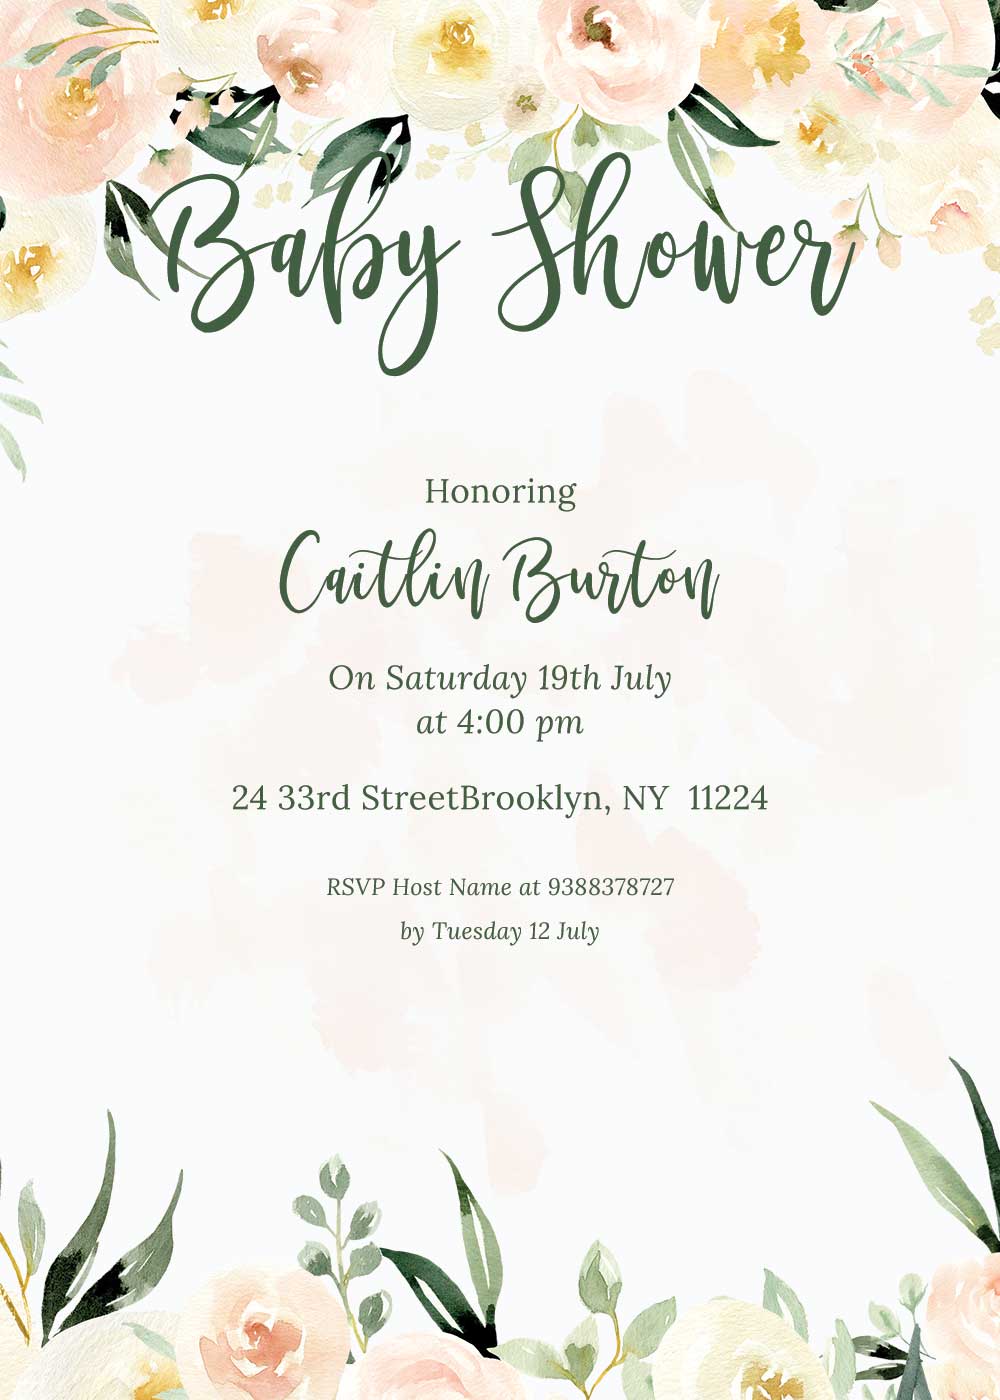 Baby shower invitations - Blush theme